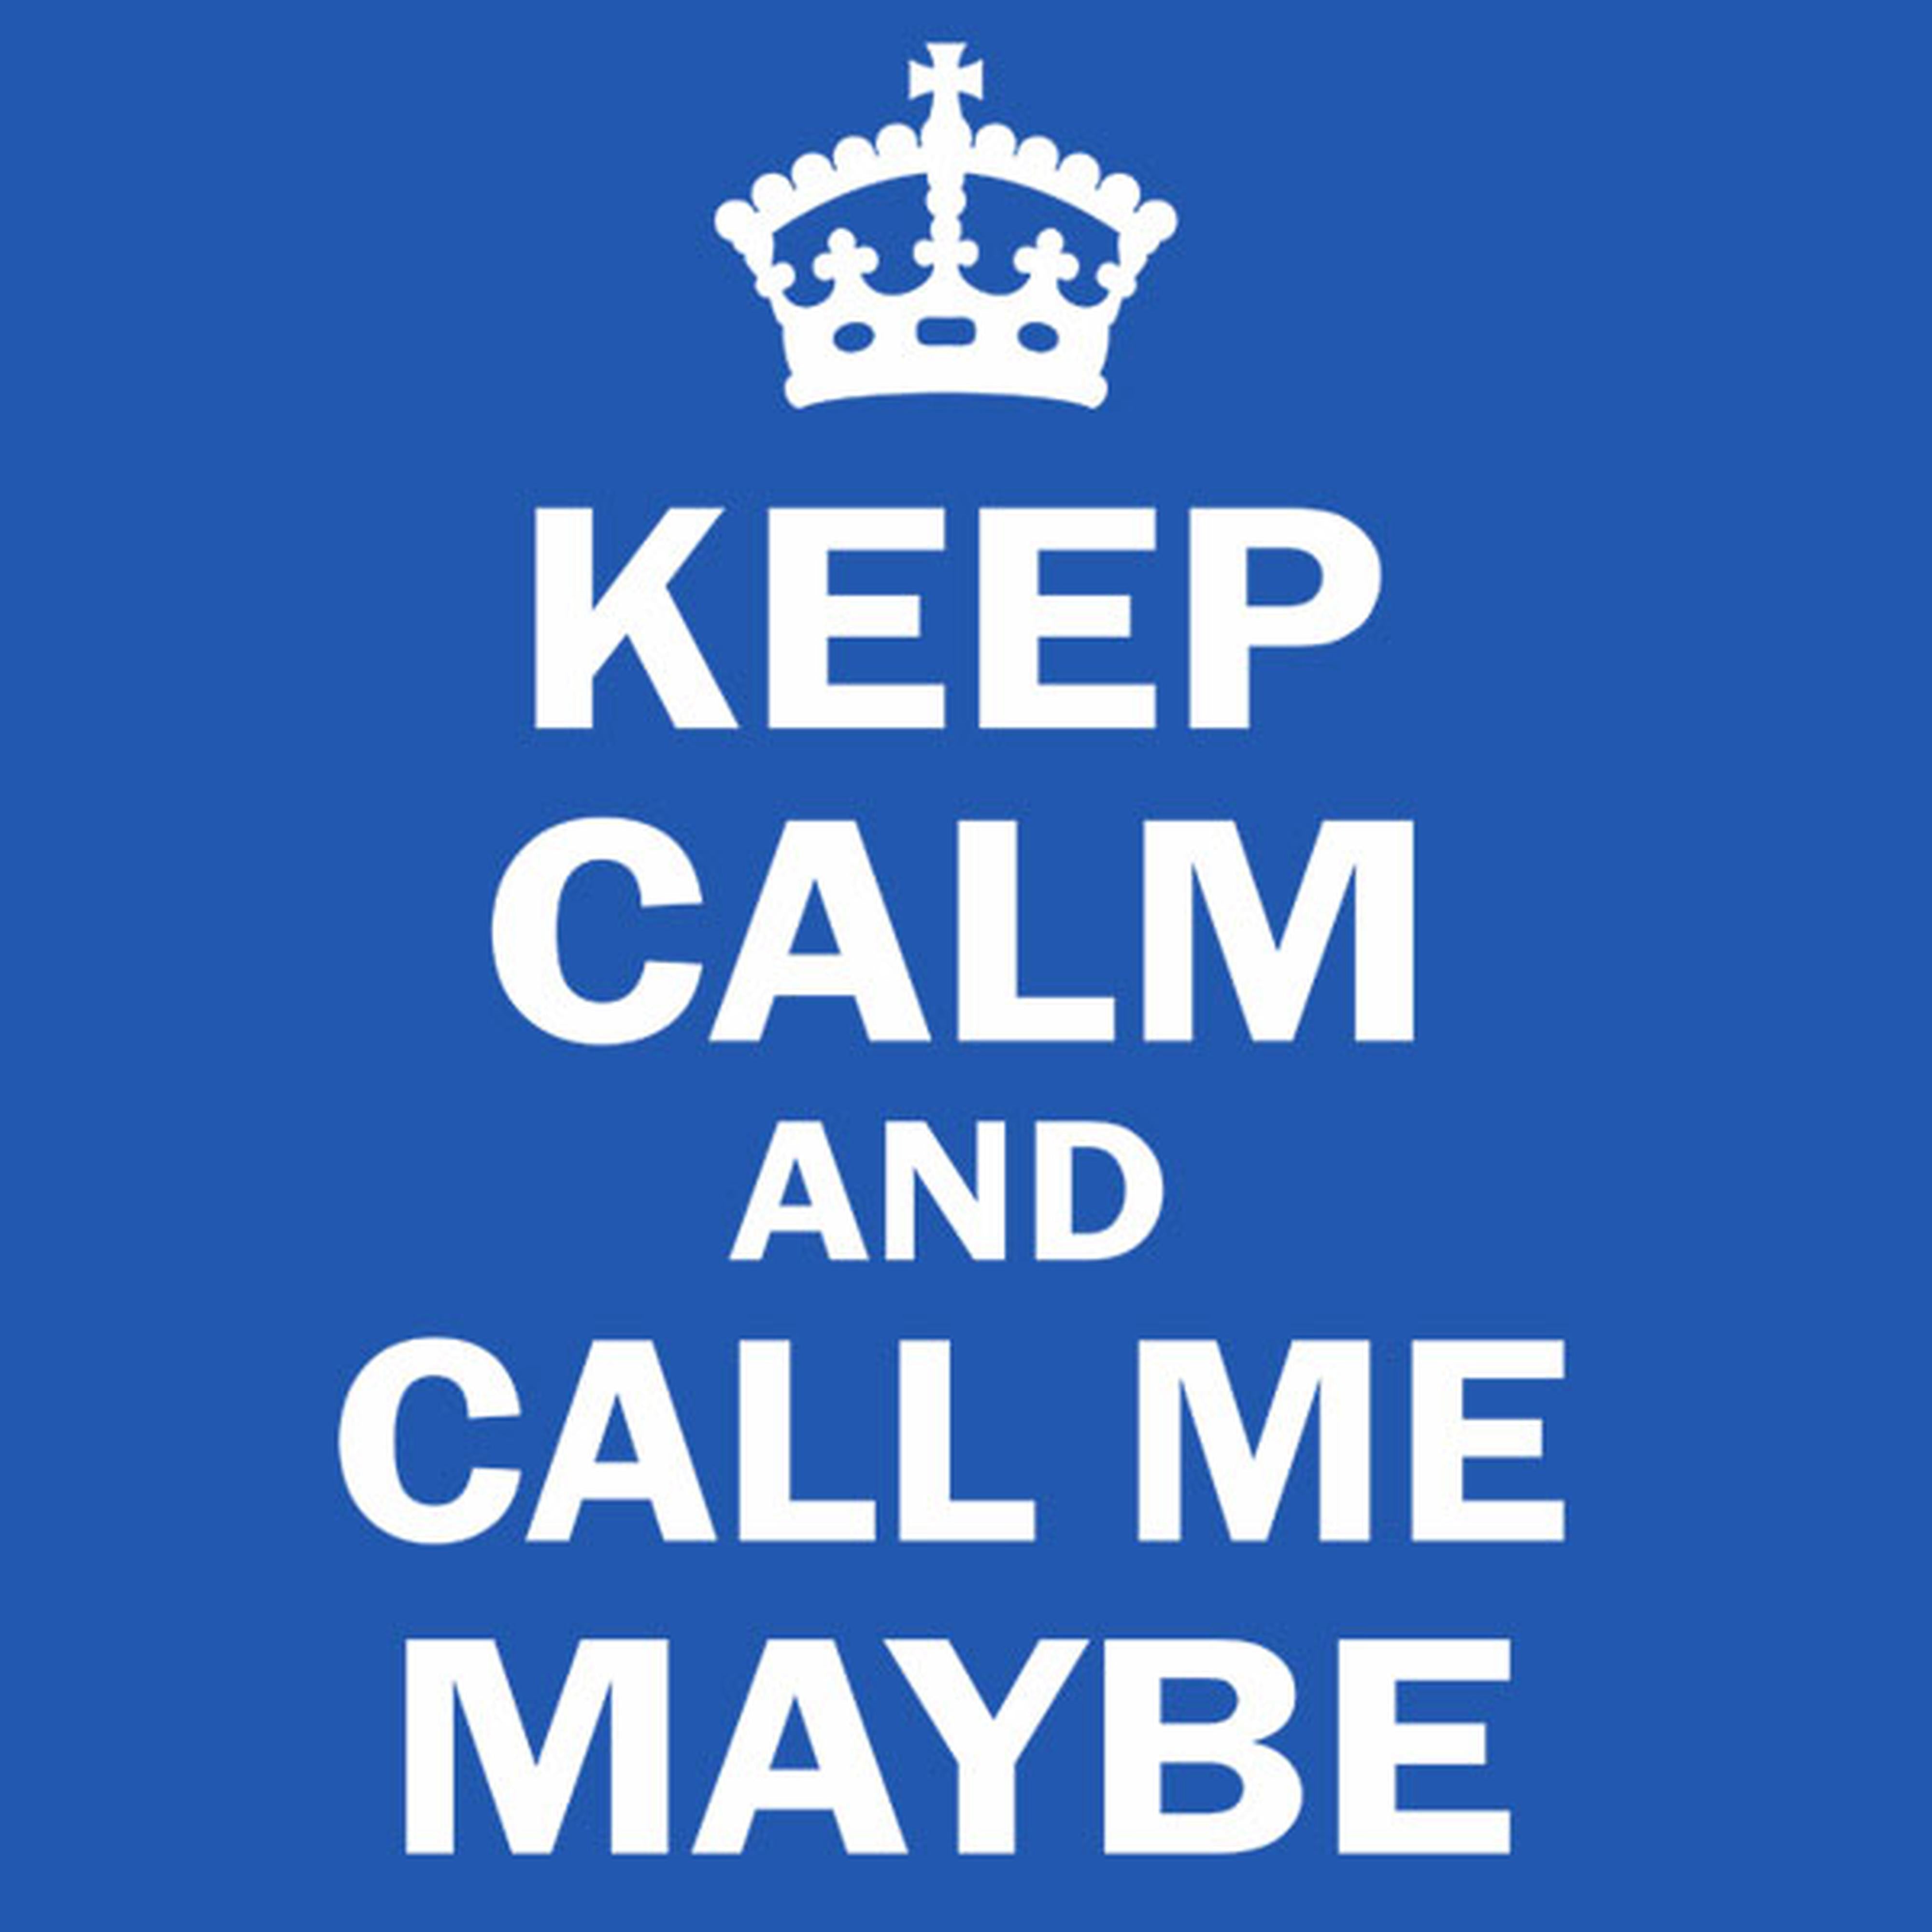 Keep calm and call me maybe